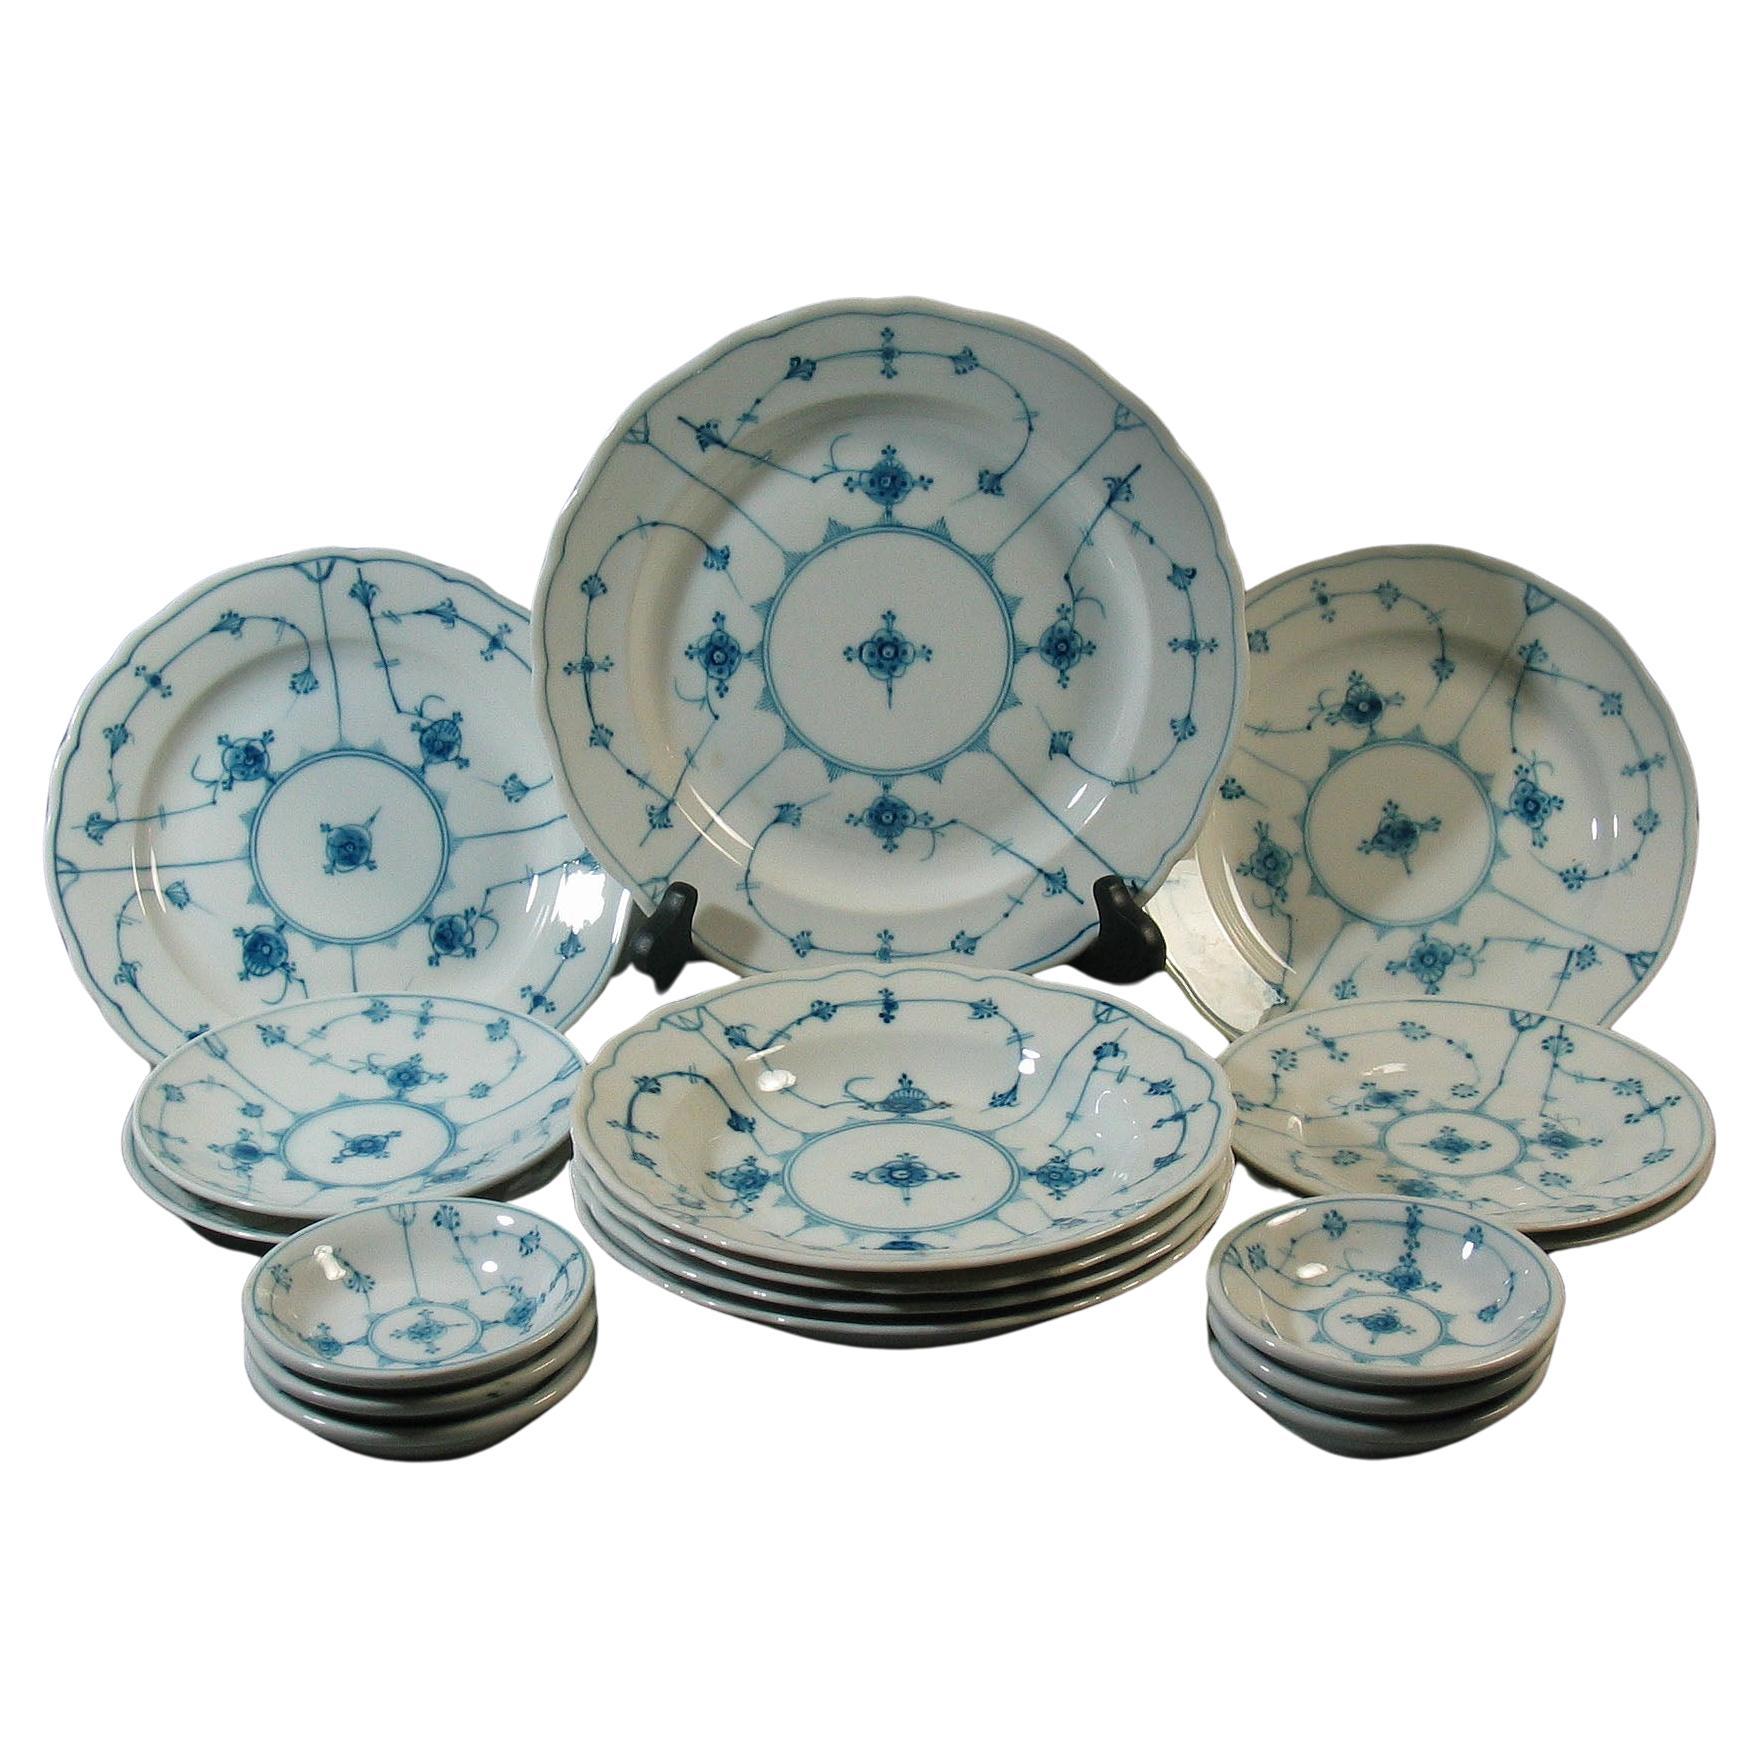 Lot of 17 Porsgrund Hand Painted Porcelain Plates in “Bogstad Straw” Pattern